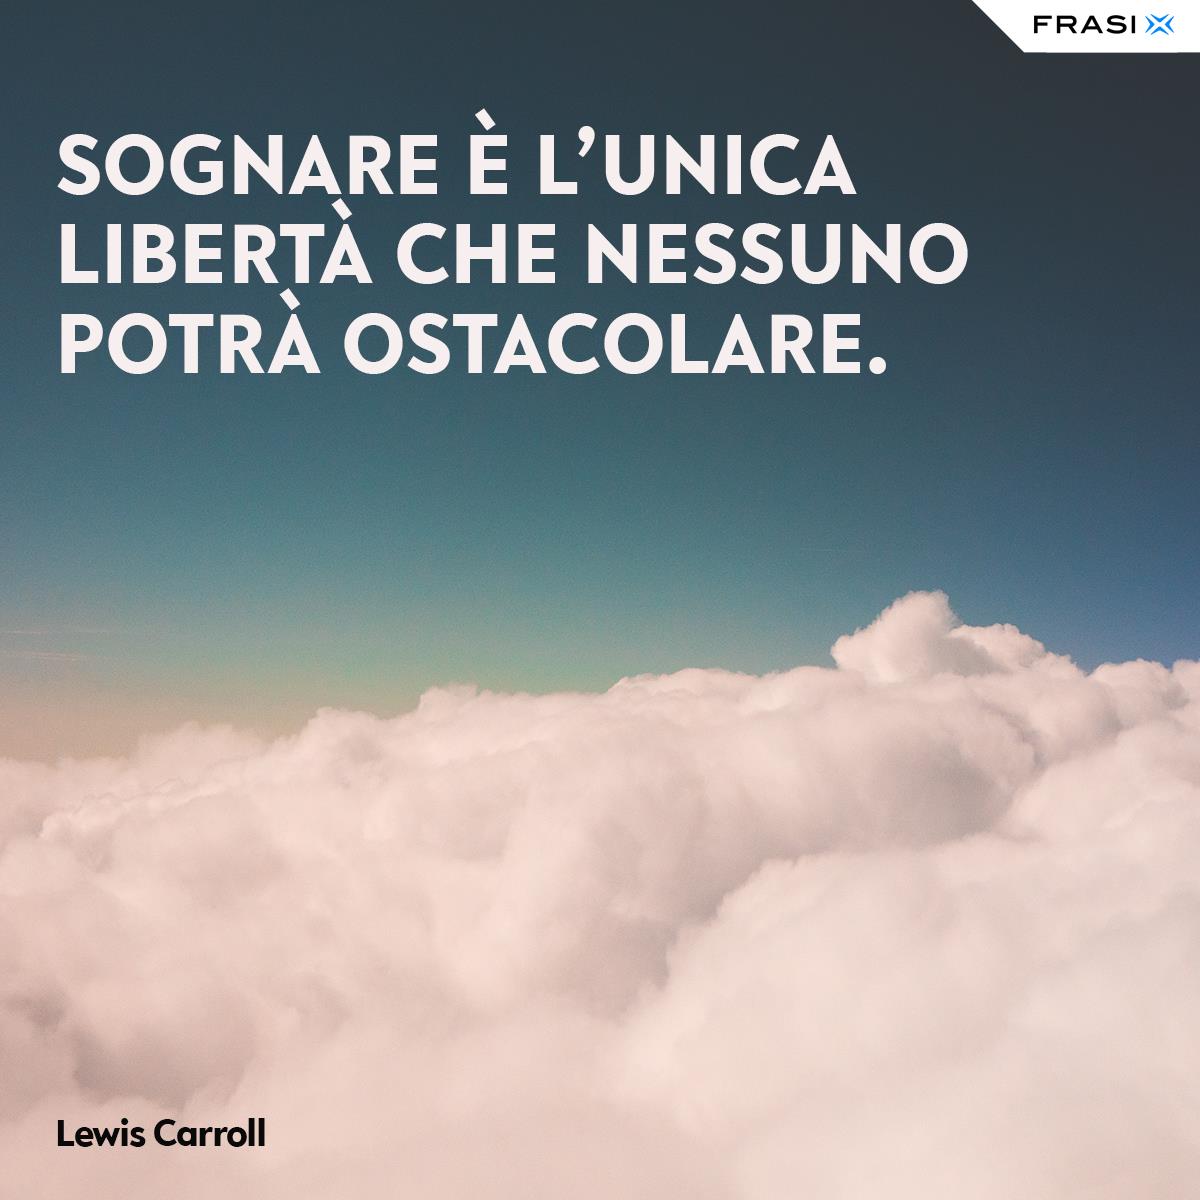 Frasi sulla libertà da libri Lewis Carroll